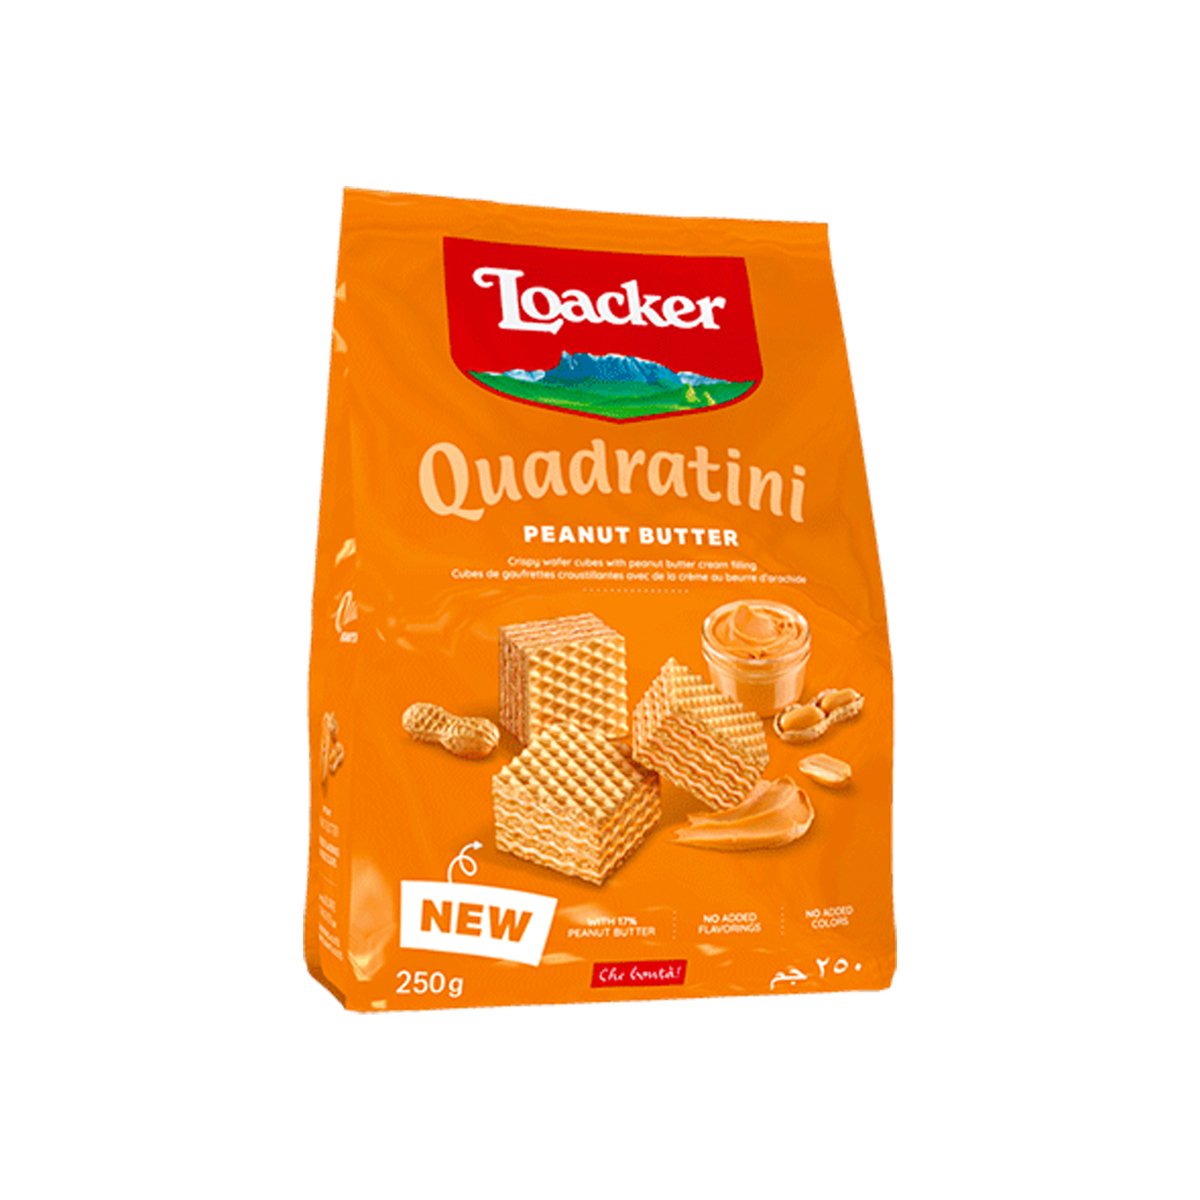 Loacker Quadratini Peanut Butter 250g